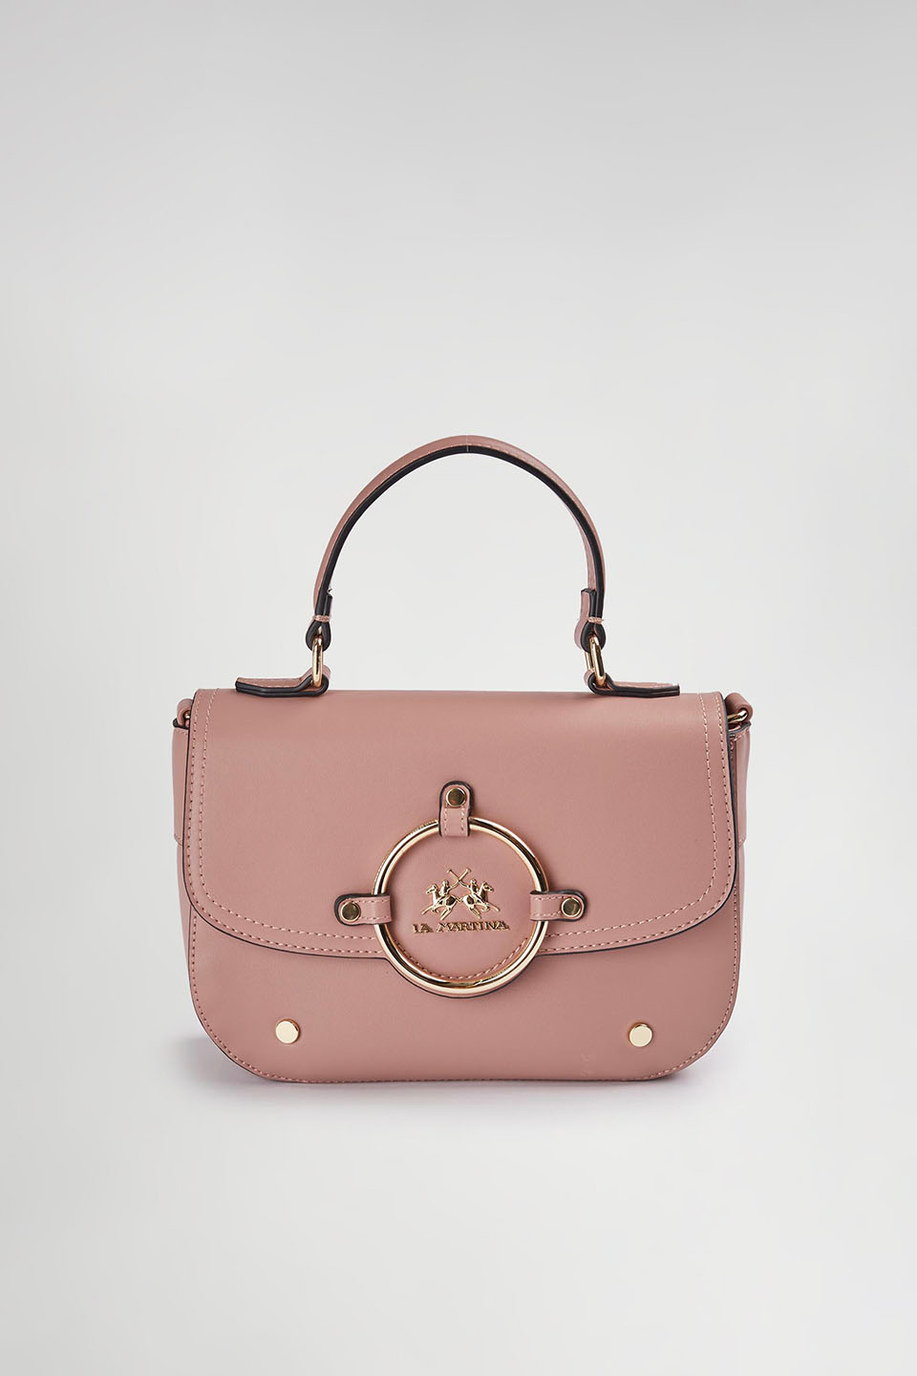 PU leather bag - Accessories | La Martina - Official Online Shop